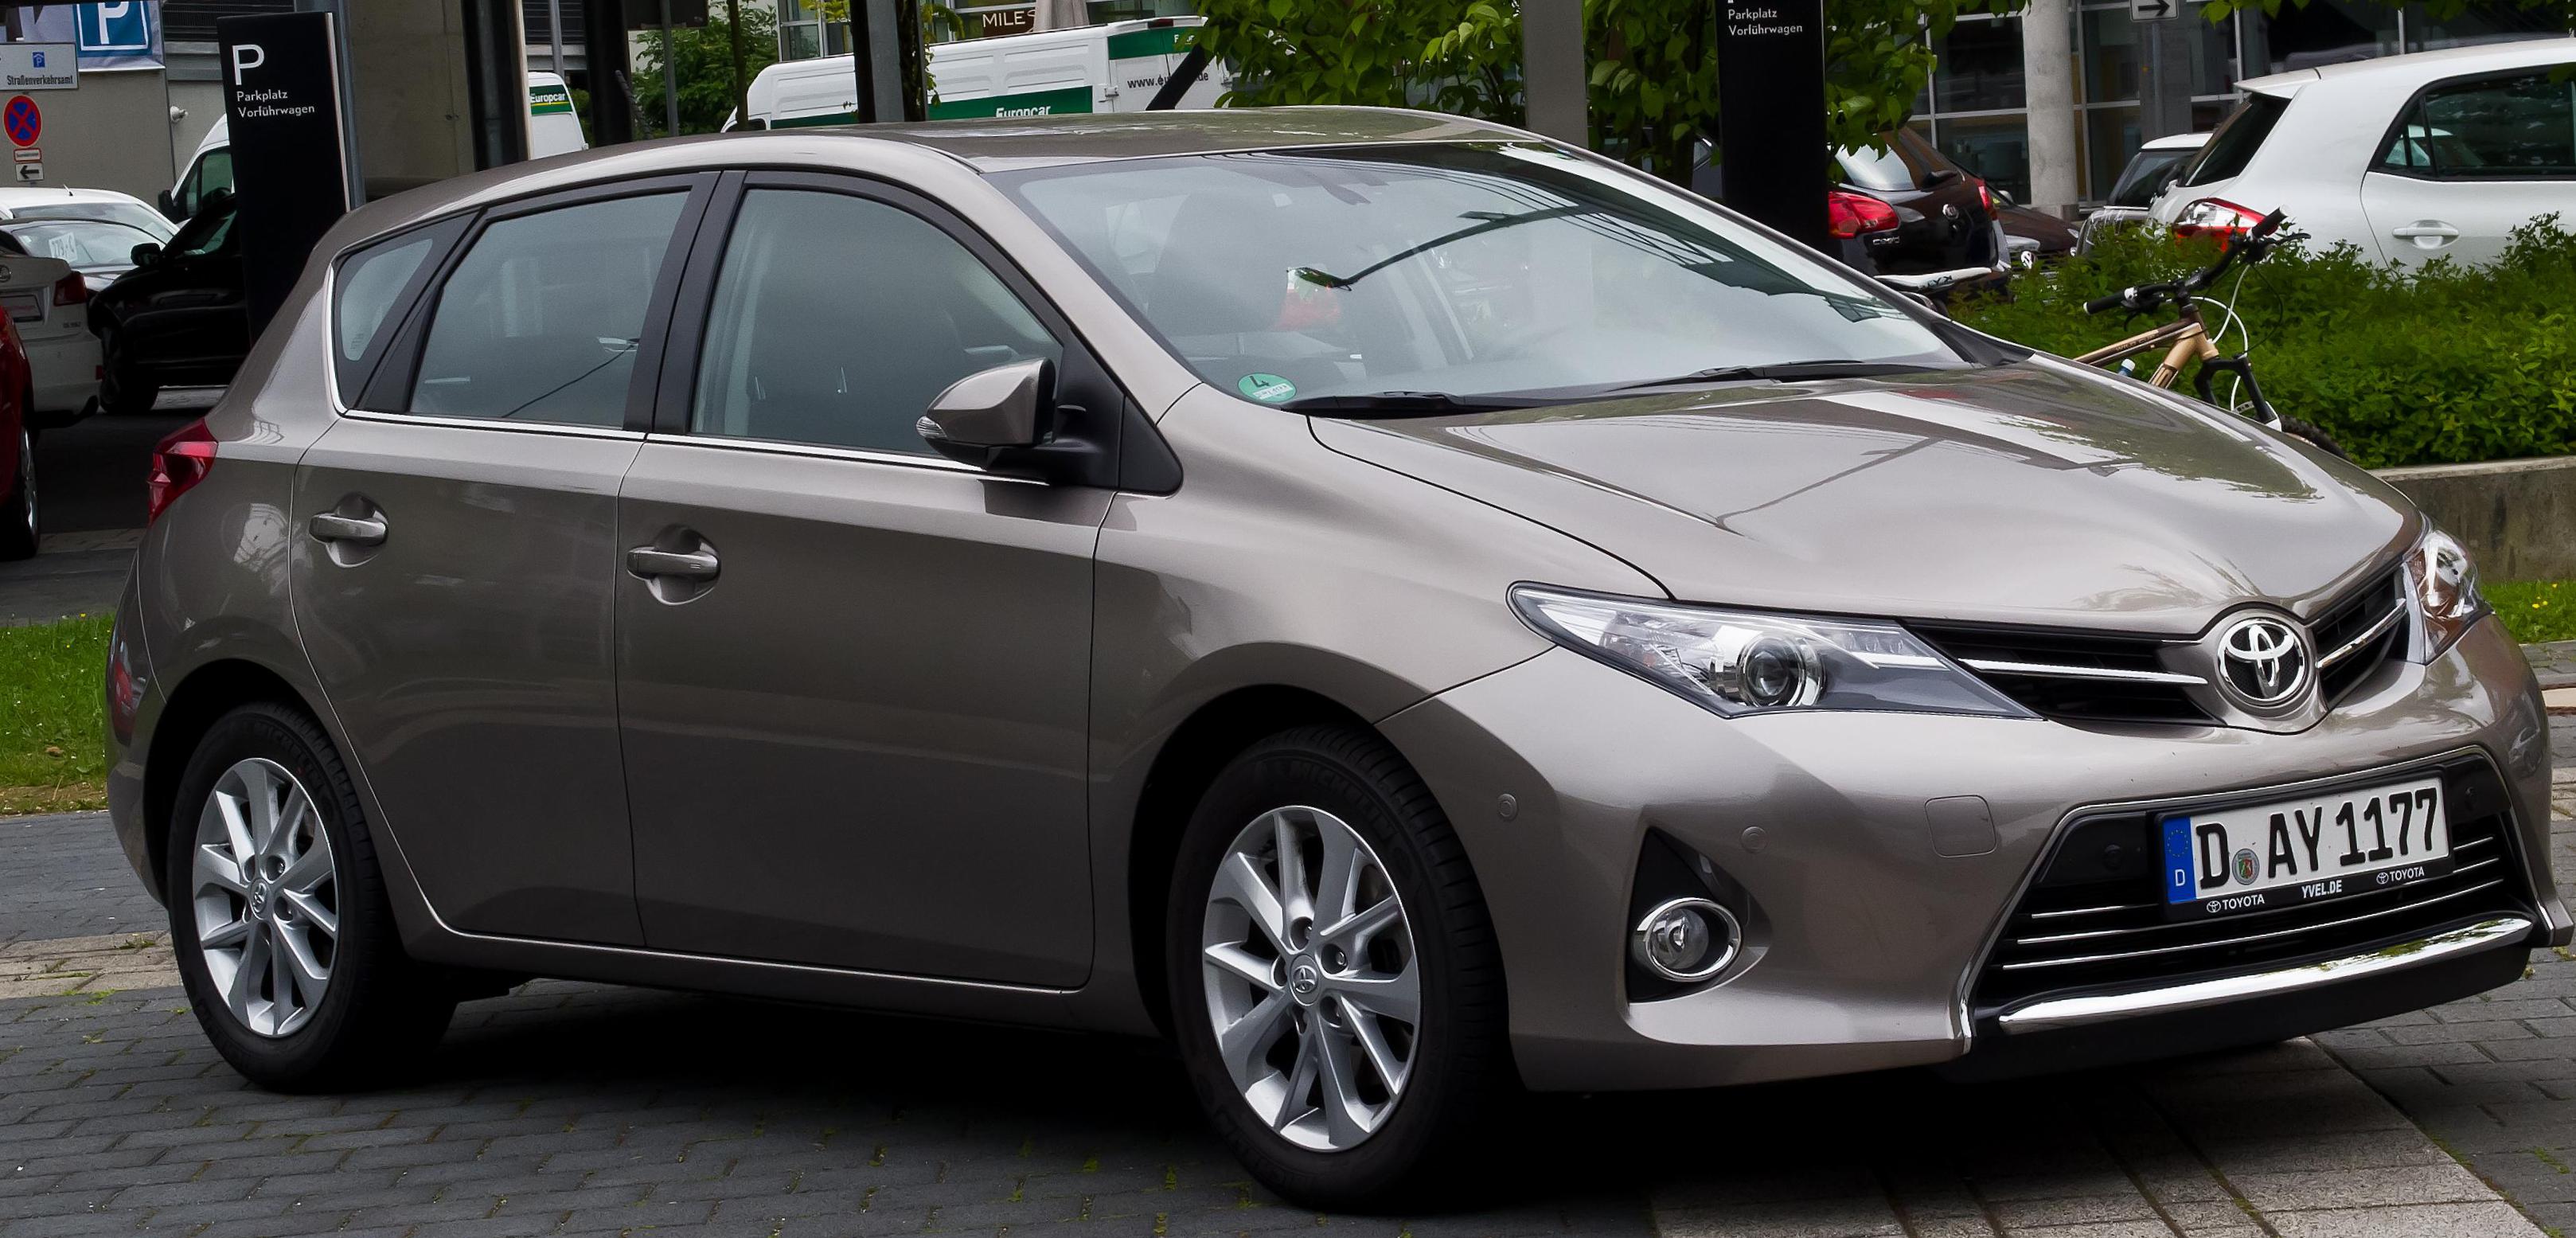 Auris Toyota used hatchback